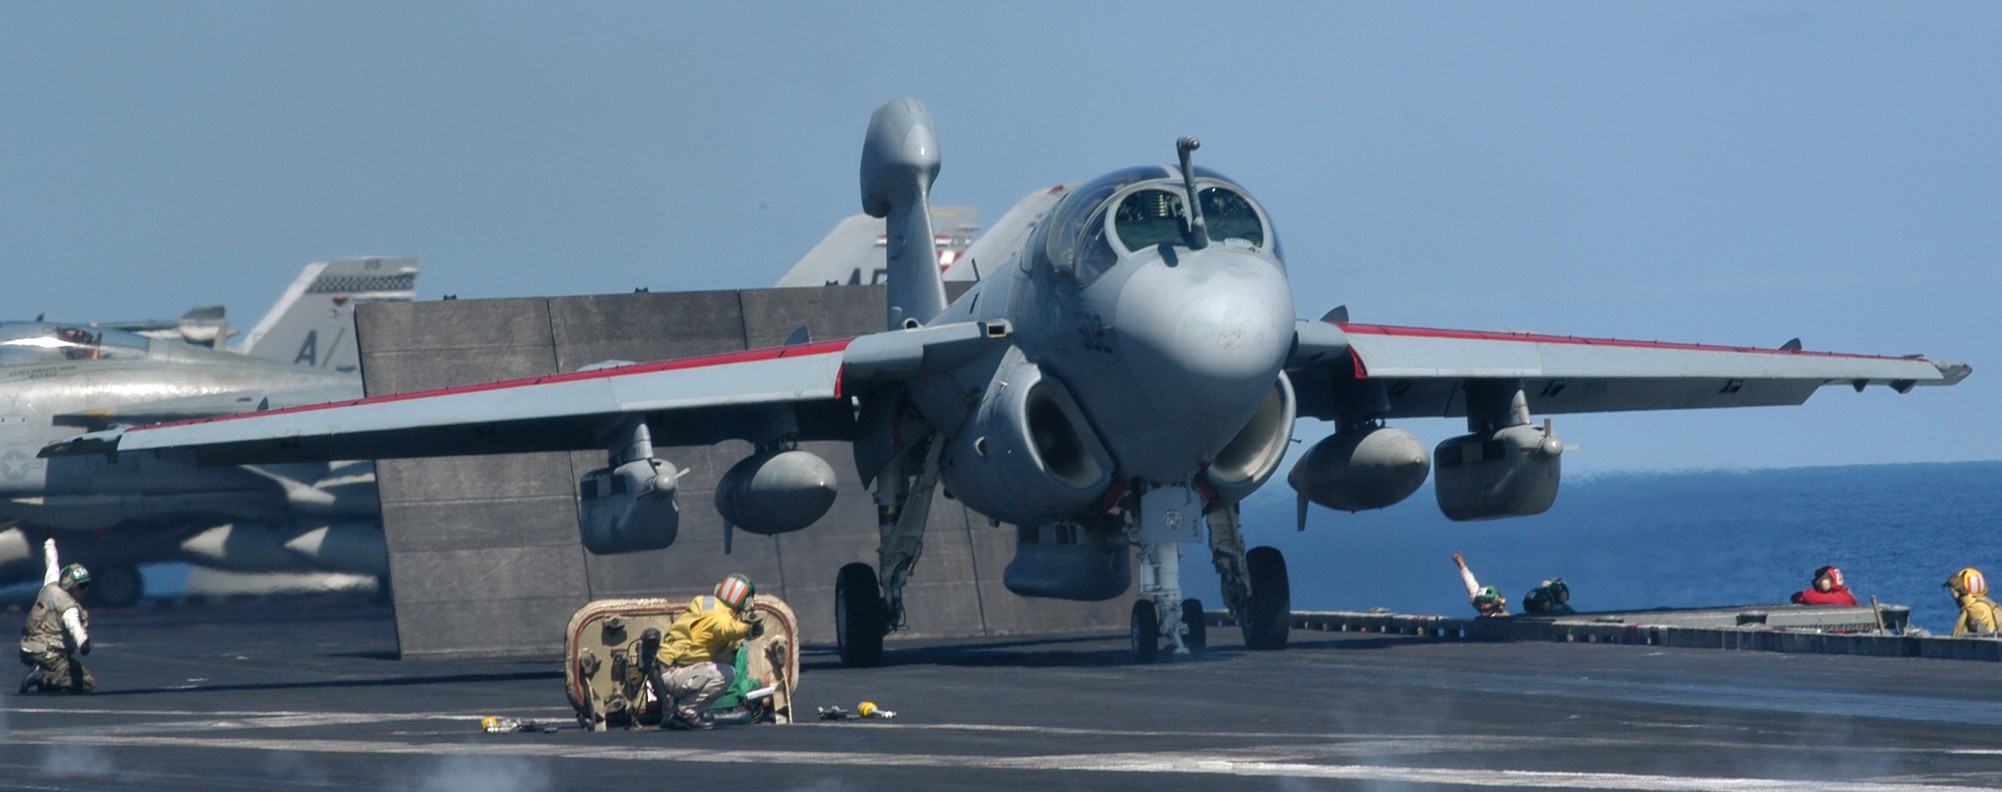 vaq-137 rooks electronic attack squadron us navy ea-6b prowler carrier air wing cvw-1 uss enterprise cvn-65 03